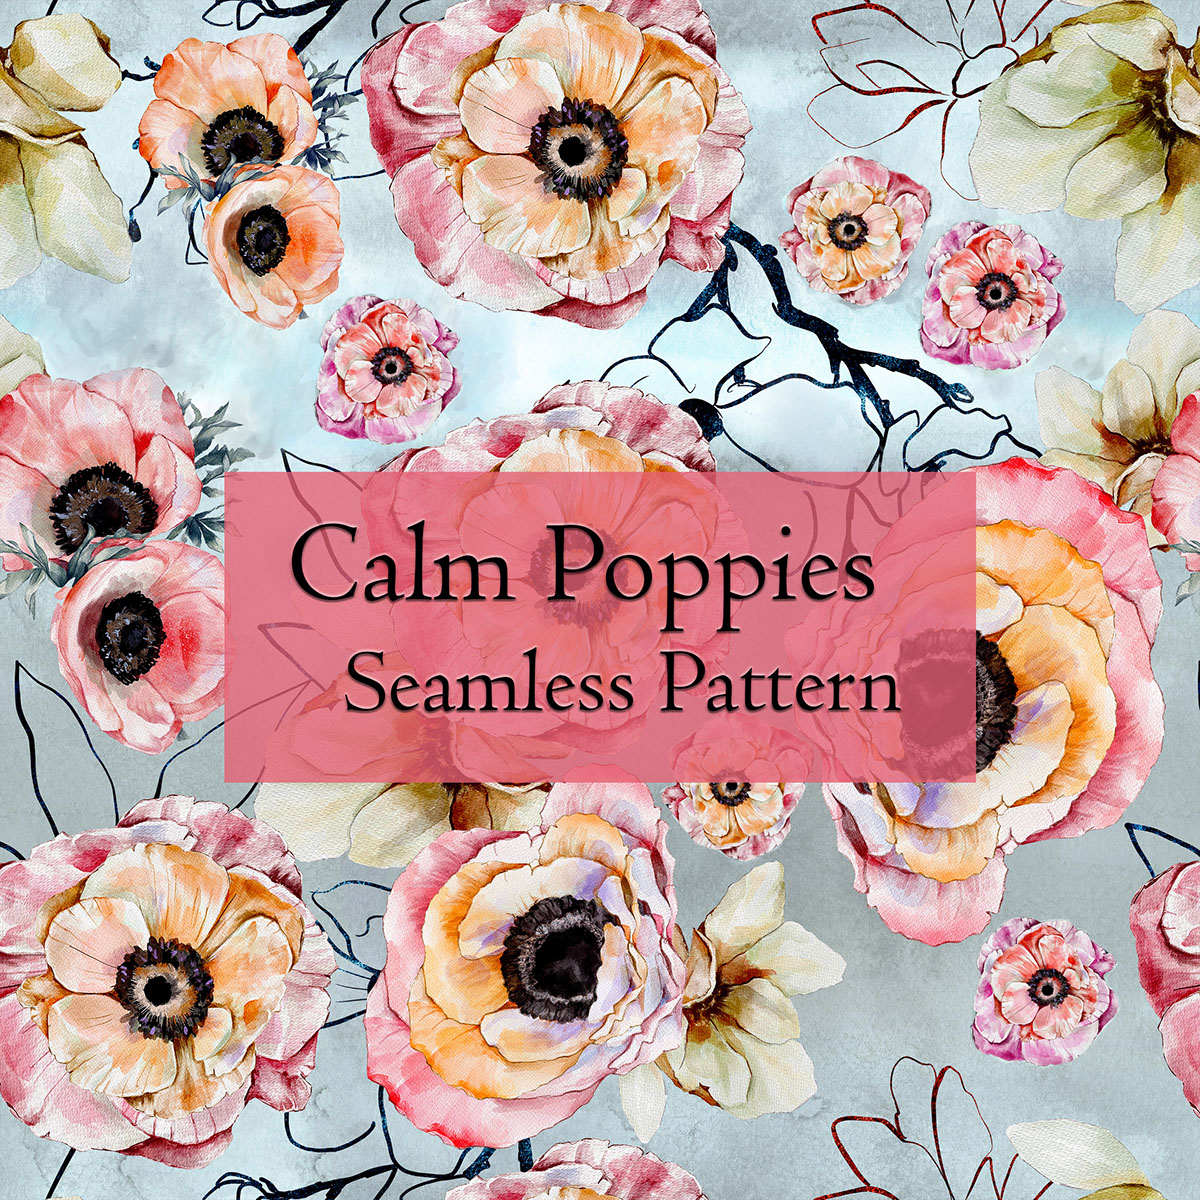 Calm Poppies seamless pattern 12x12 JPEG rendition image